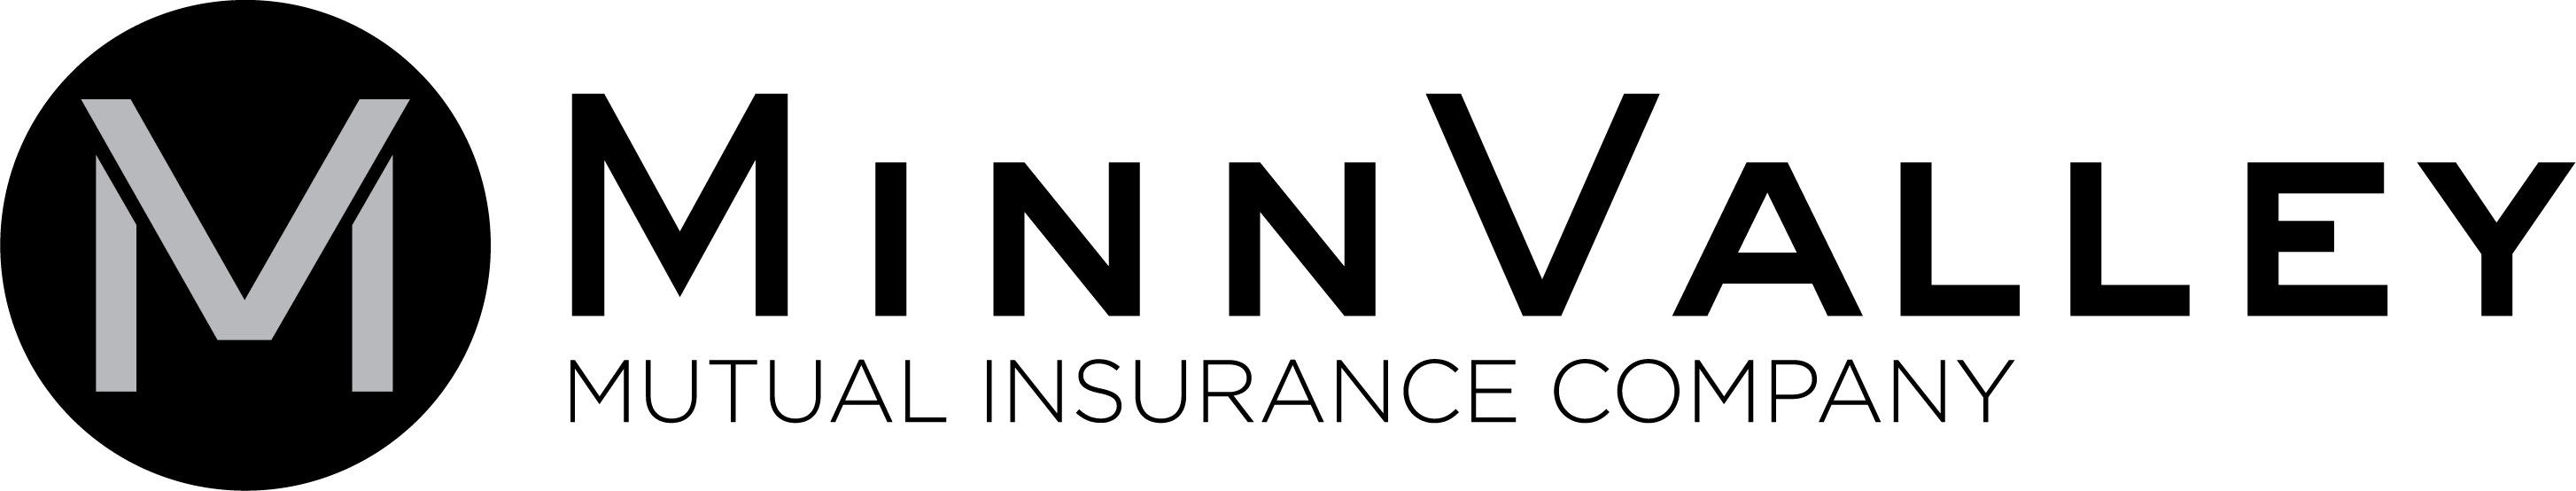 MinnValley Mutual Insurance Company